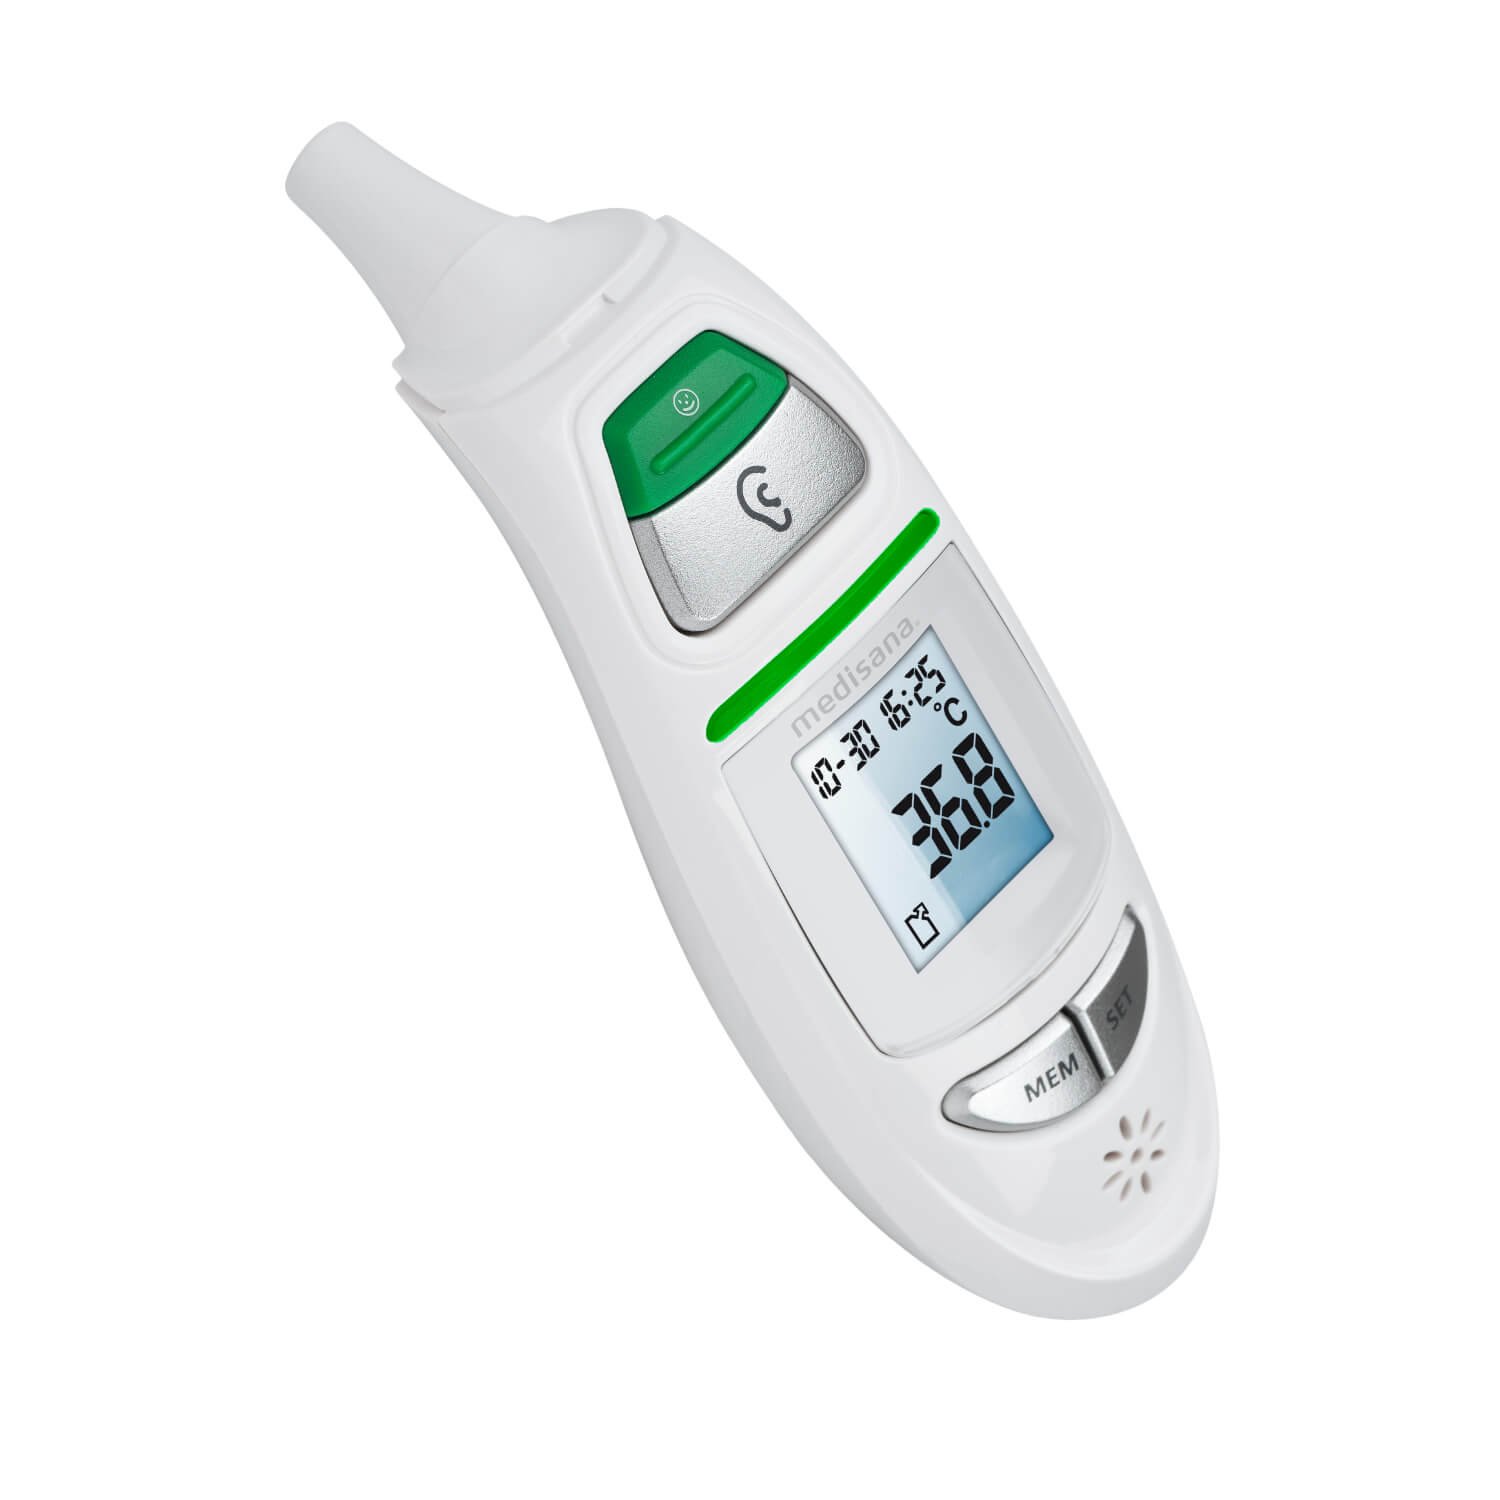 Multifunctionele infrarood thermometer TM 750 - Wit